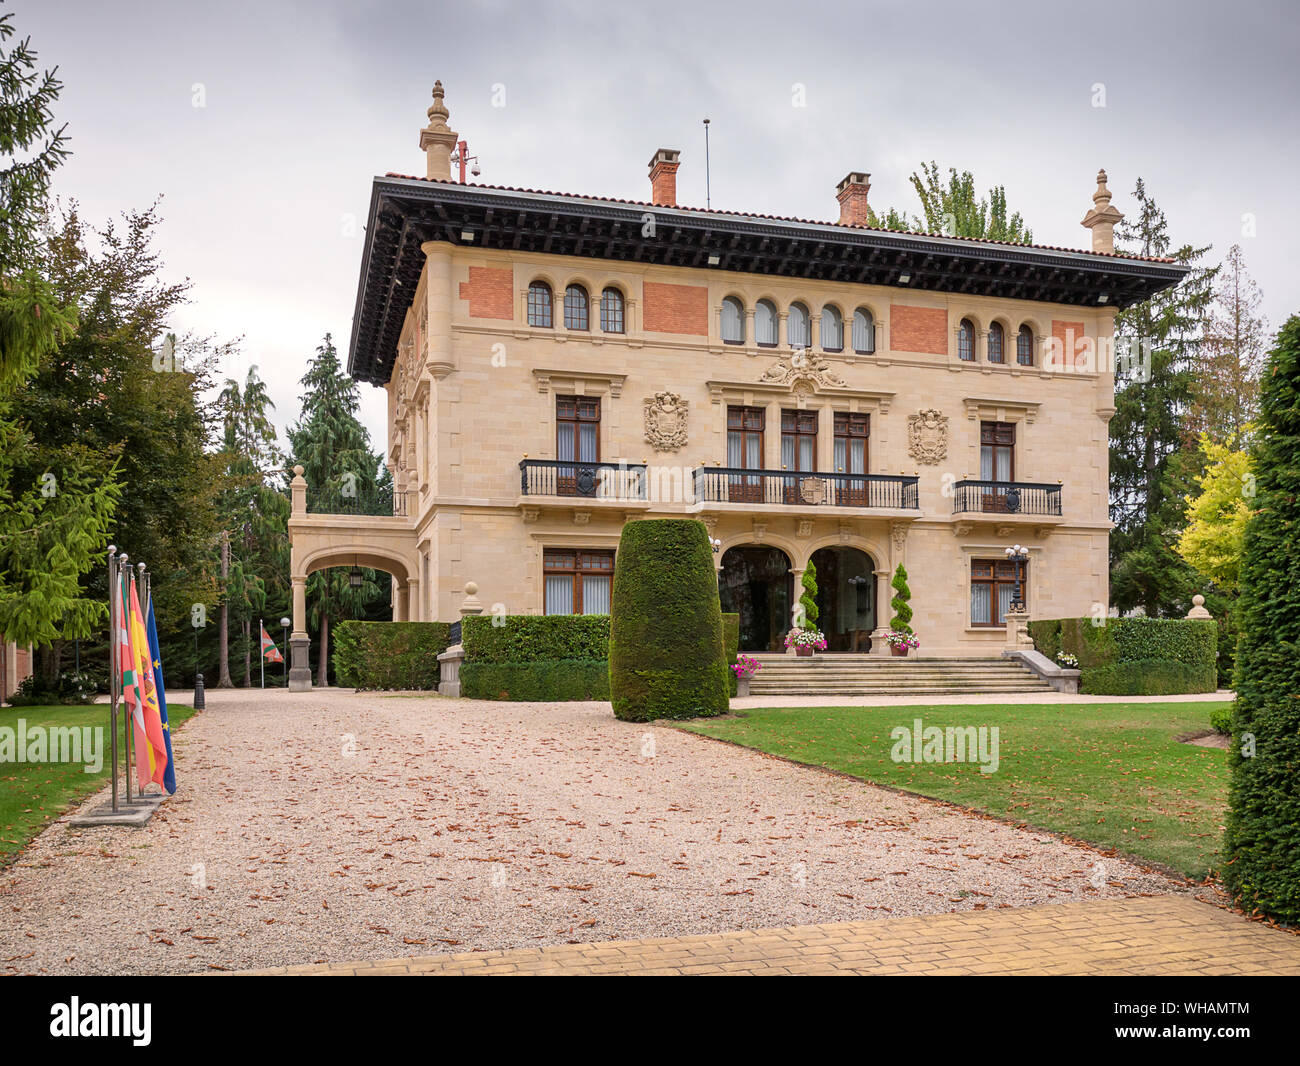 juria Enea Palace, domicile of the Lehendakari, the Basque prime minister, in Vitoria-Gasteiz, Basque Country, Spain Stock Photo